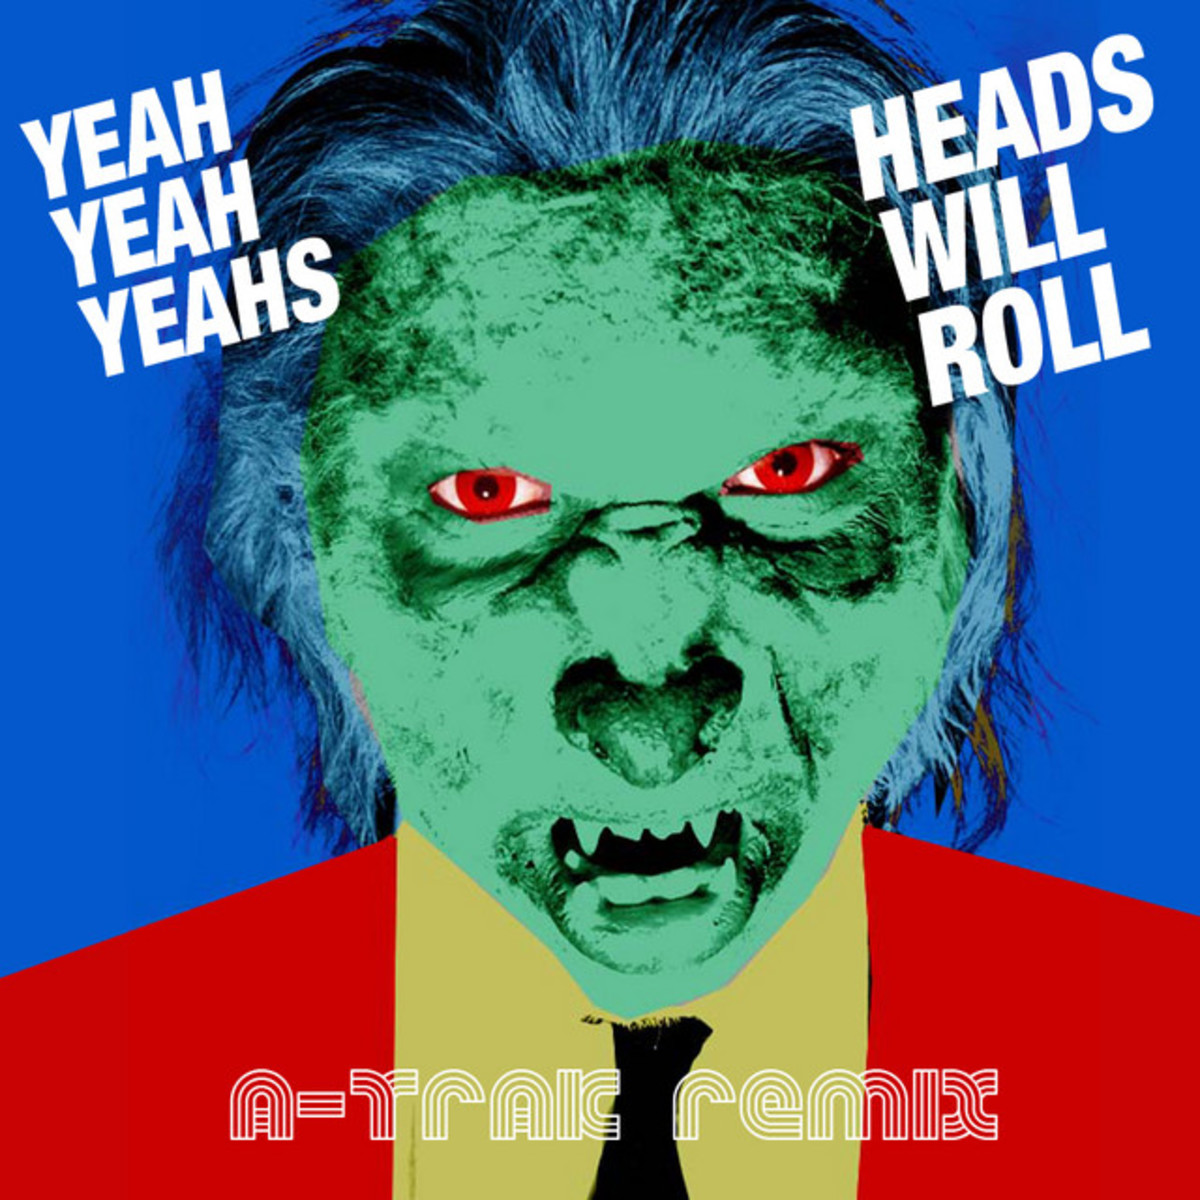 Yeah Yeah Yeahs - “Heads Will Roll” (A-Trak Remix) | 2009